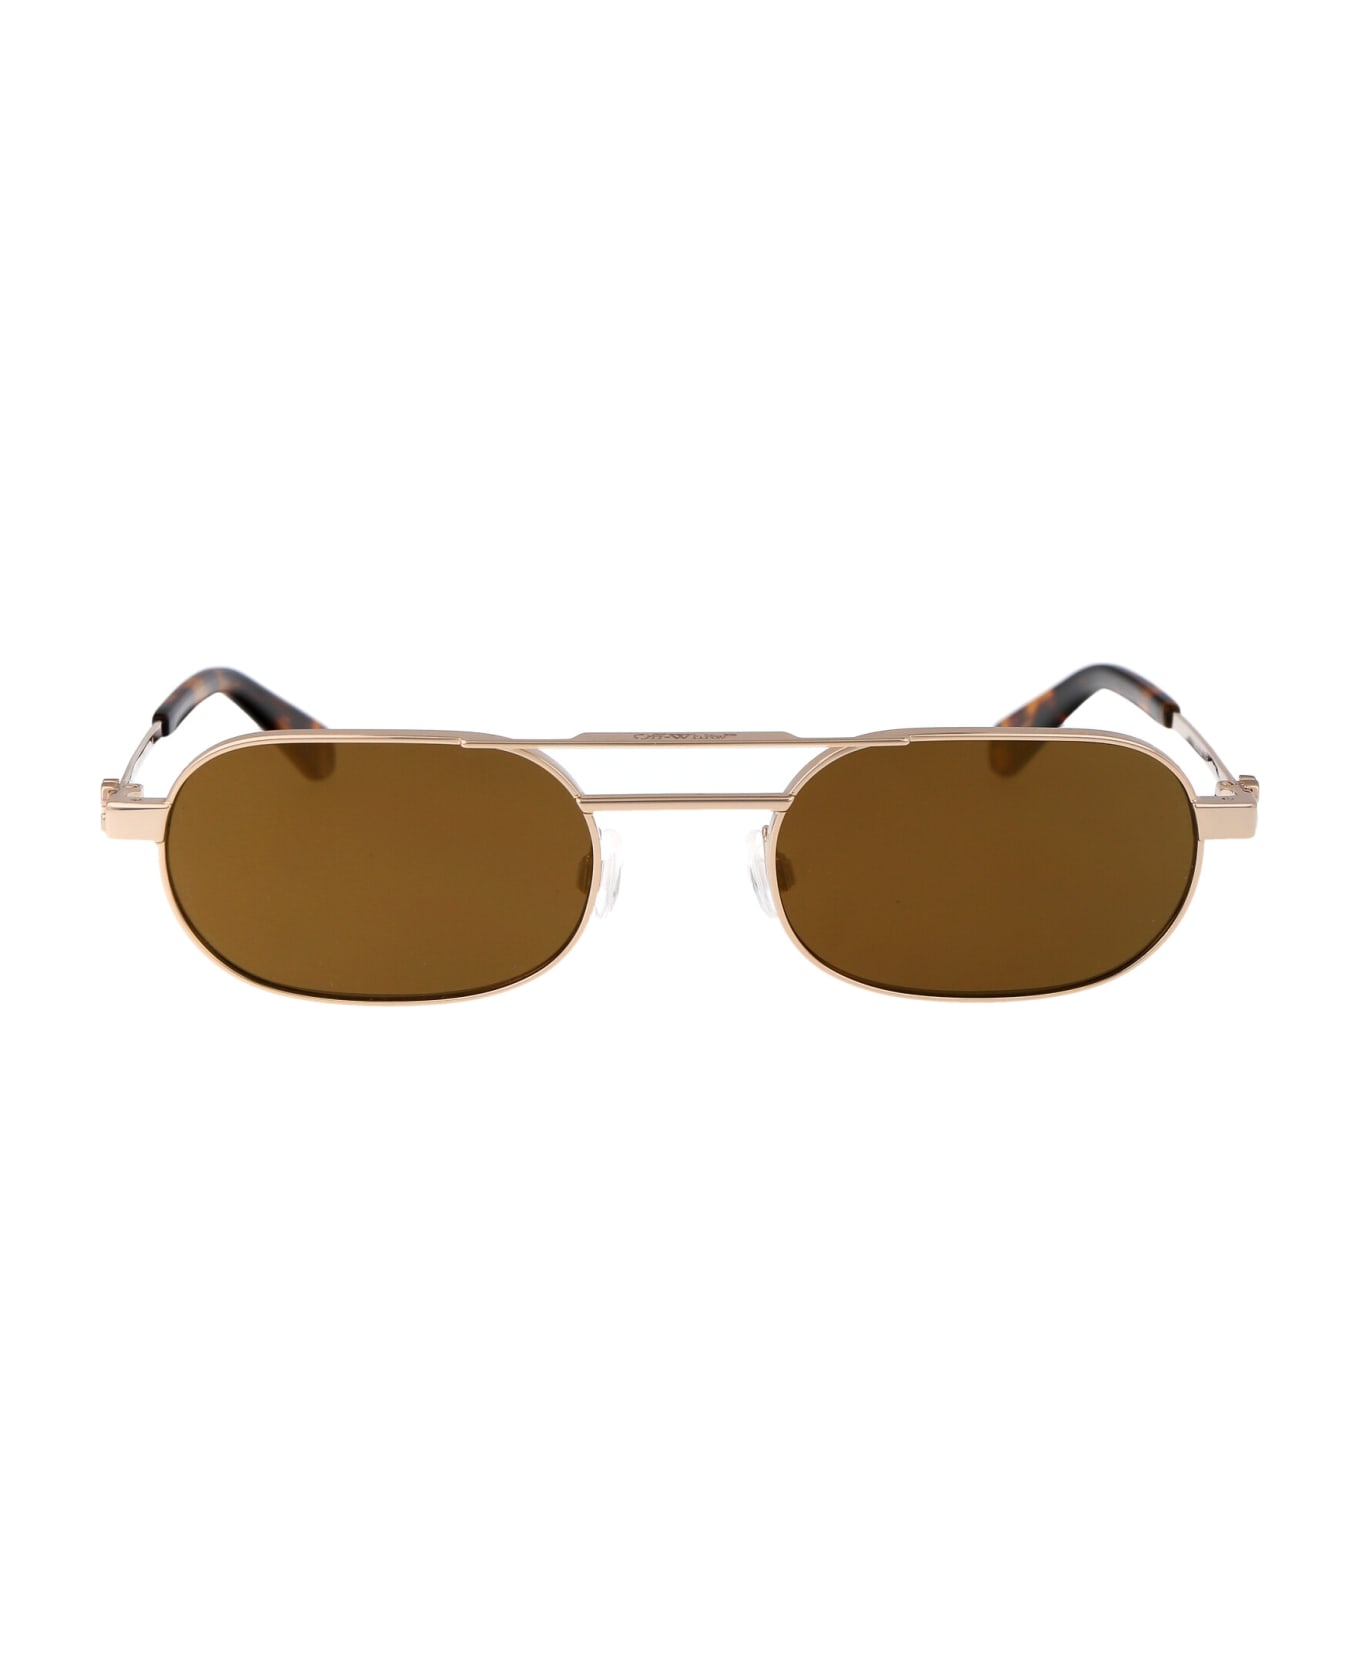 Off-White Vaiden Sunglasses - 7676 GOLD GOLD  サングラス